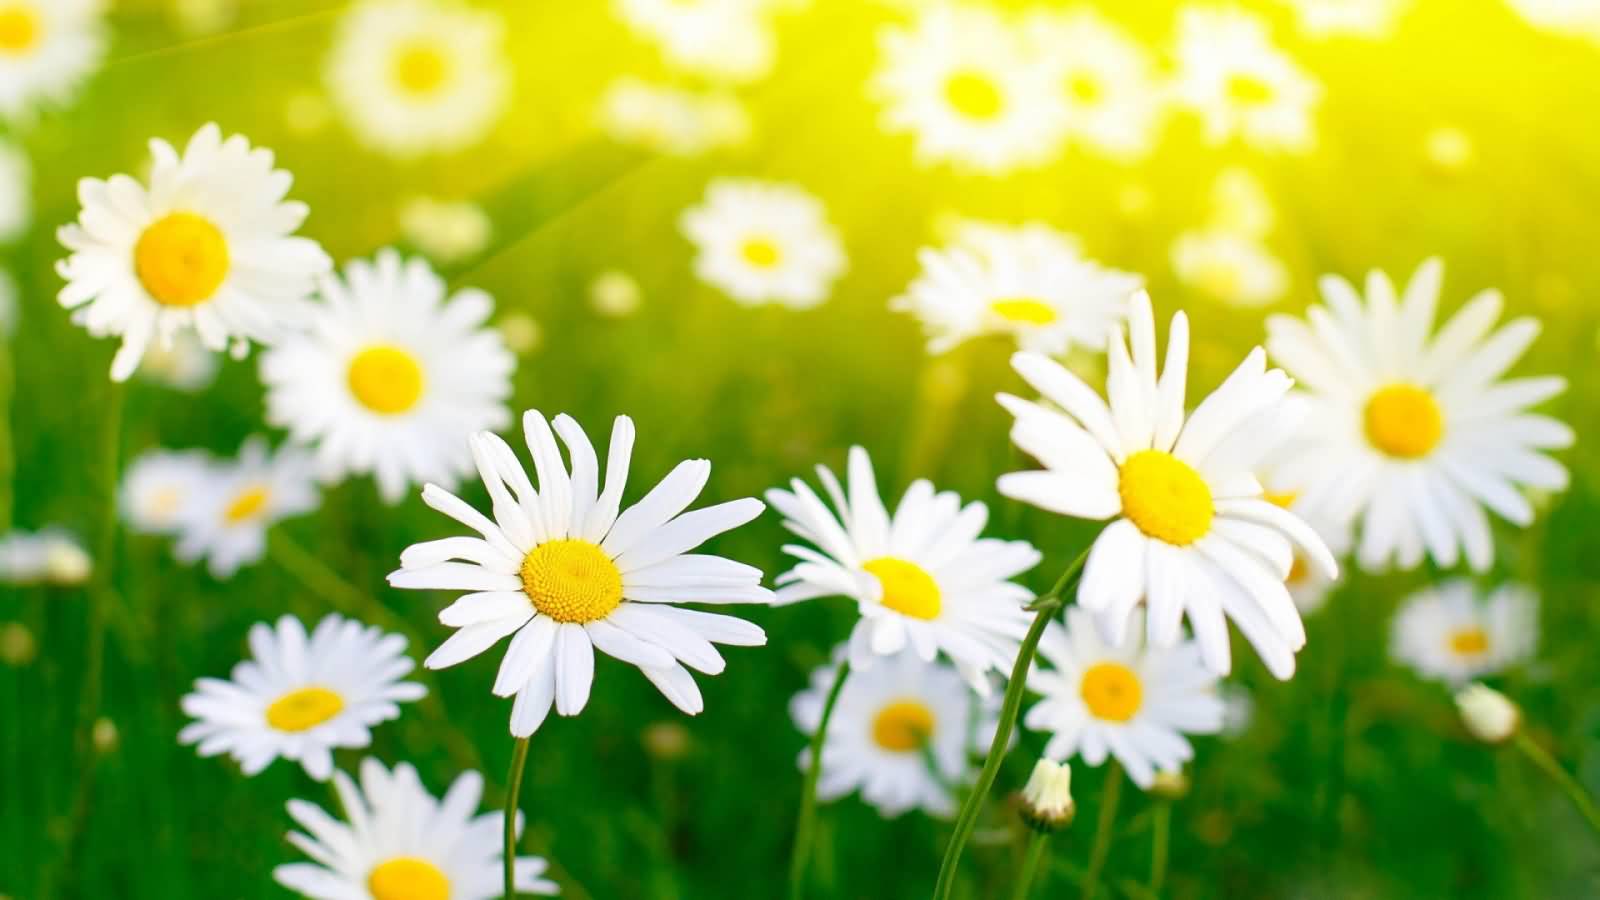 Cute Daisy Flowers Field Picture